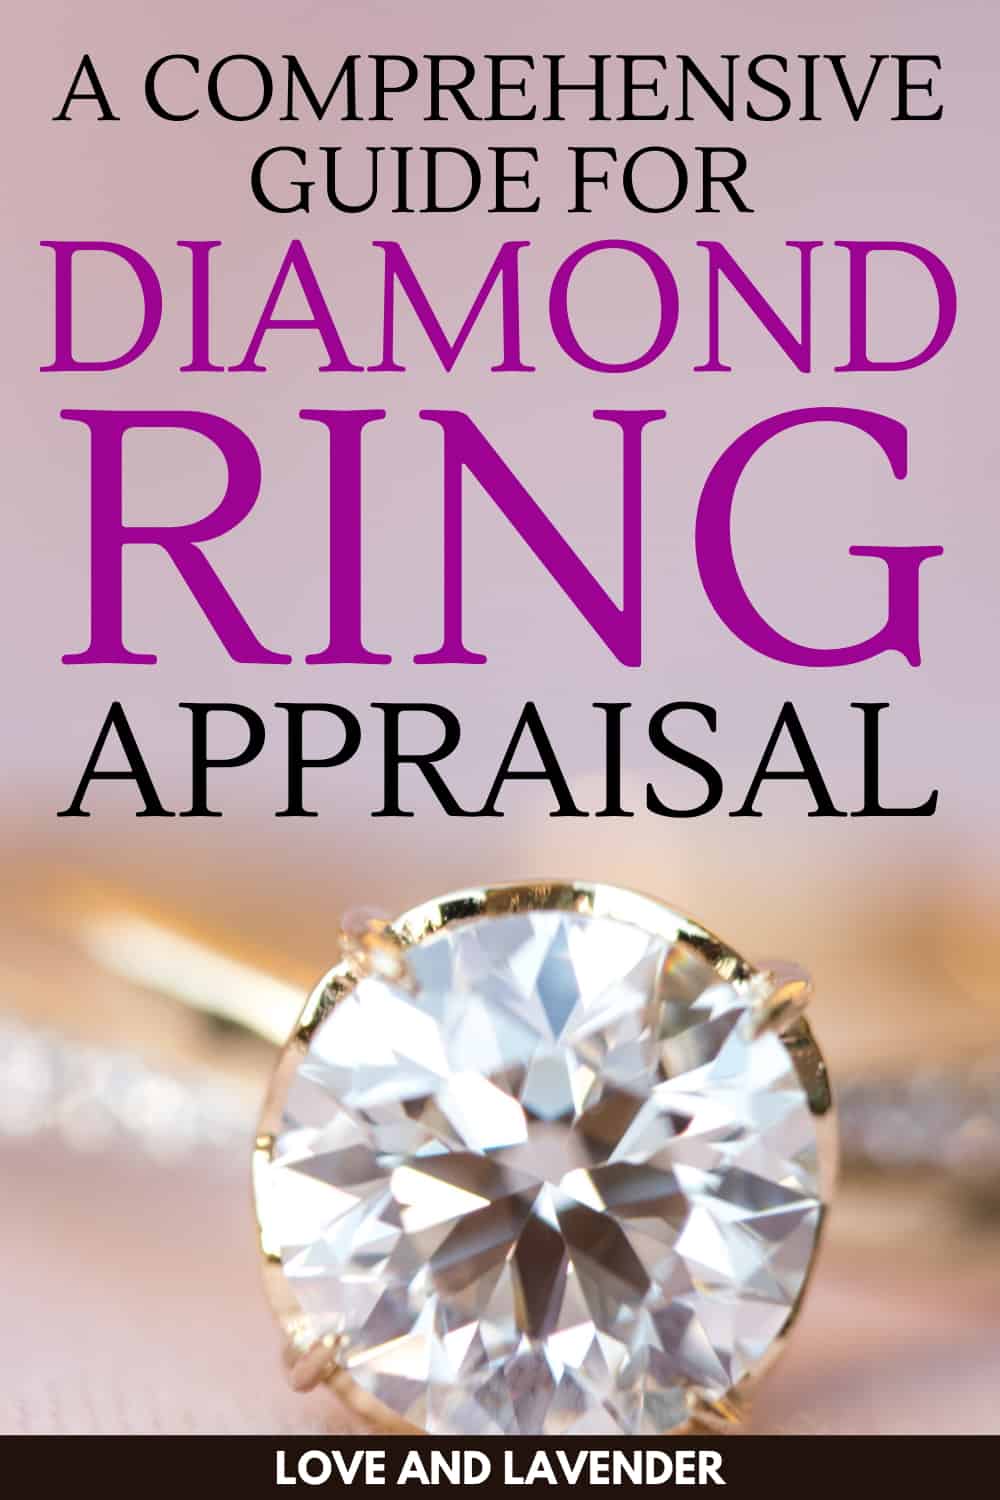 Pinterest pin - diamond ring appraisal guide